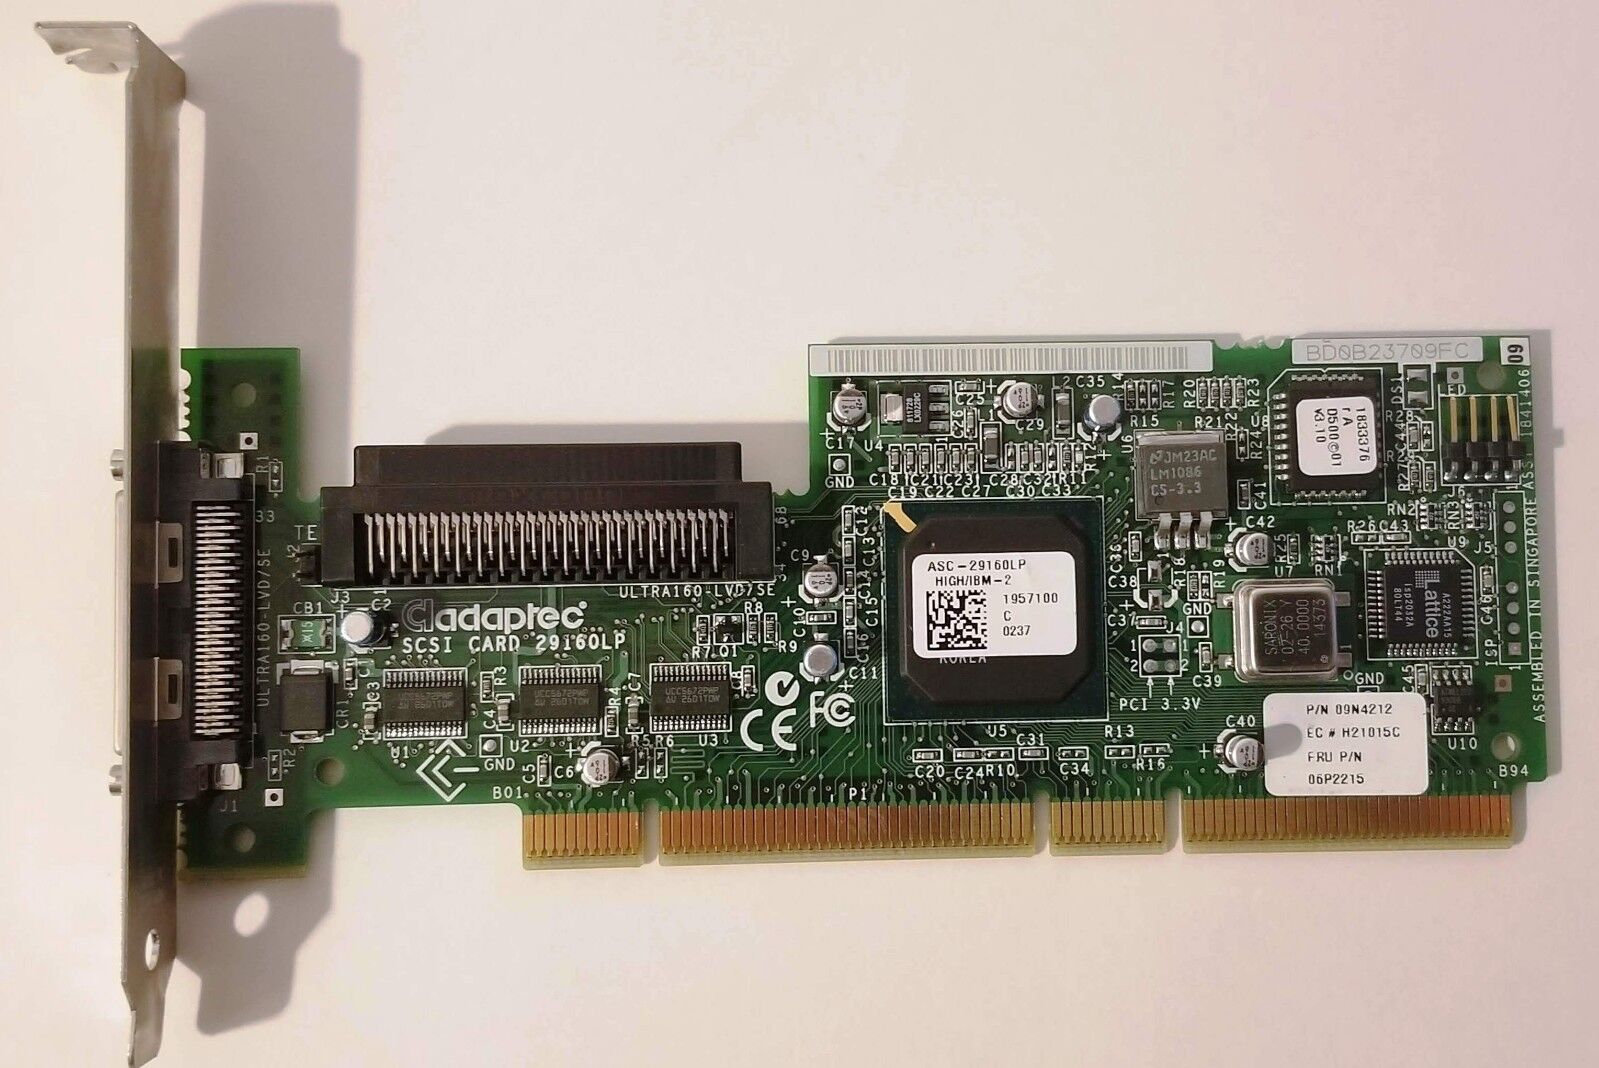 Adaptec 29160LP ULTRA160-LVD-SE SCSI Card